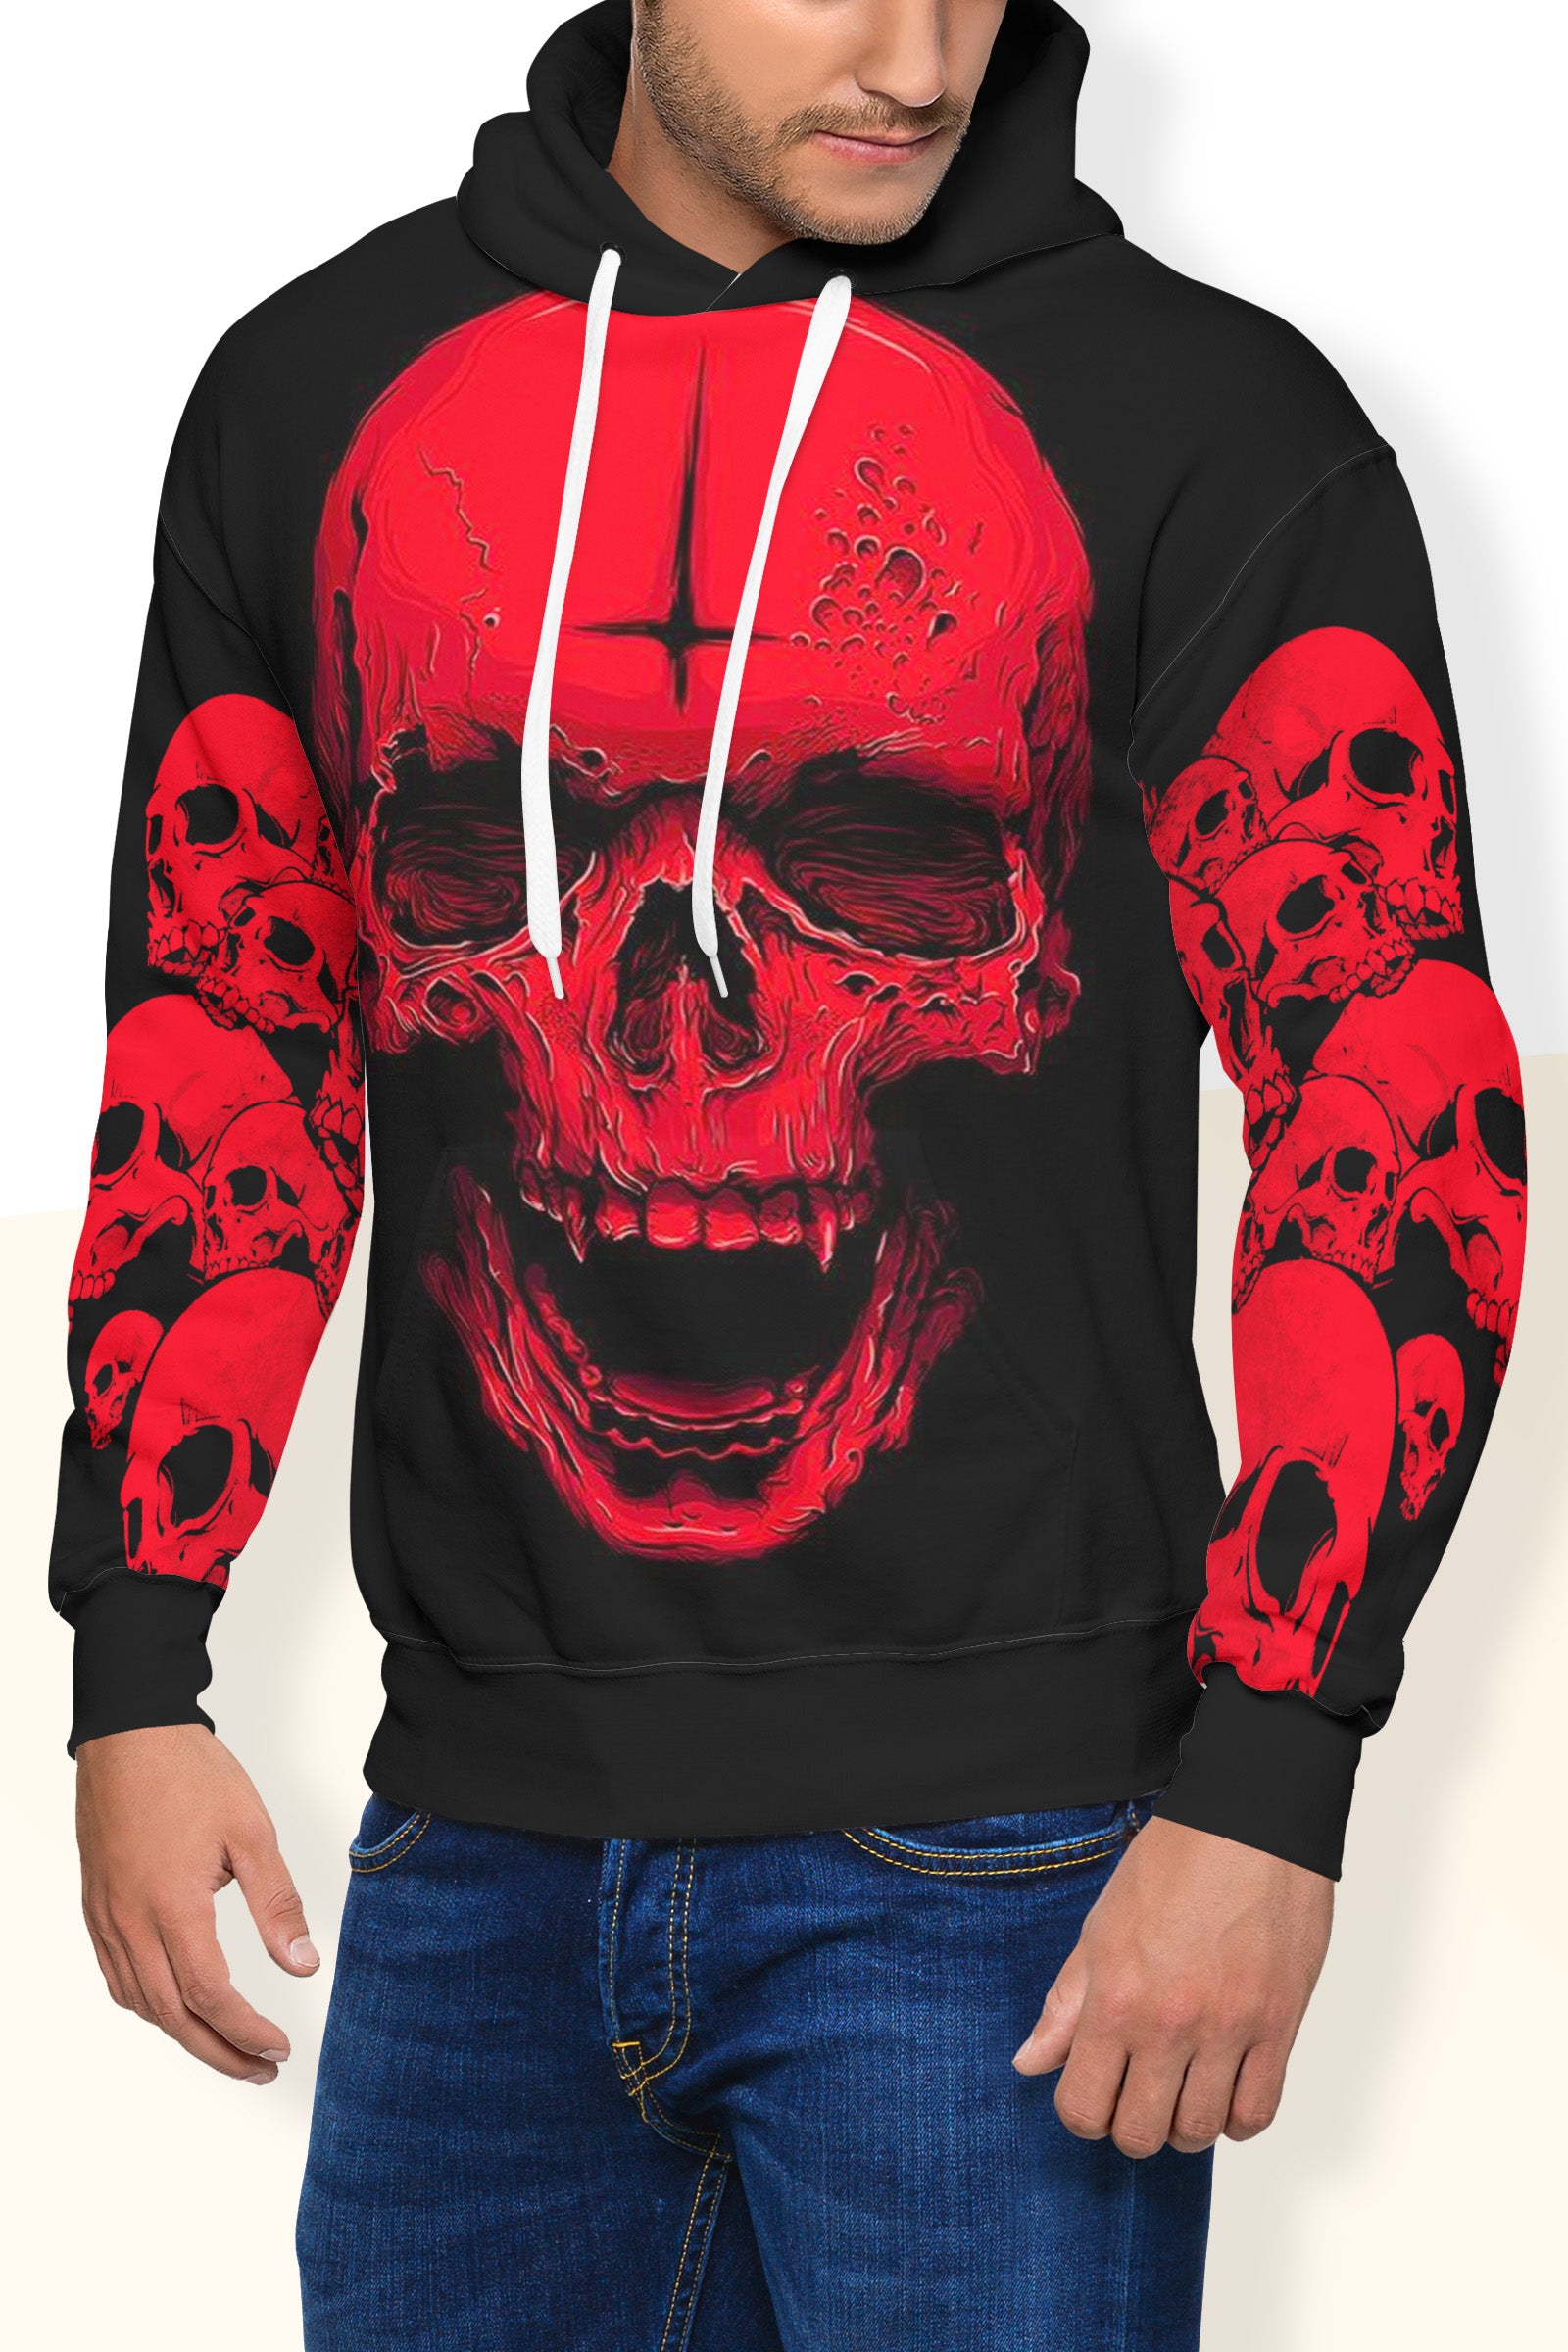 Skull Hoodie Red Inverted Cross Santa Gothic Shirt